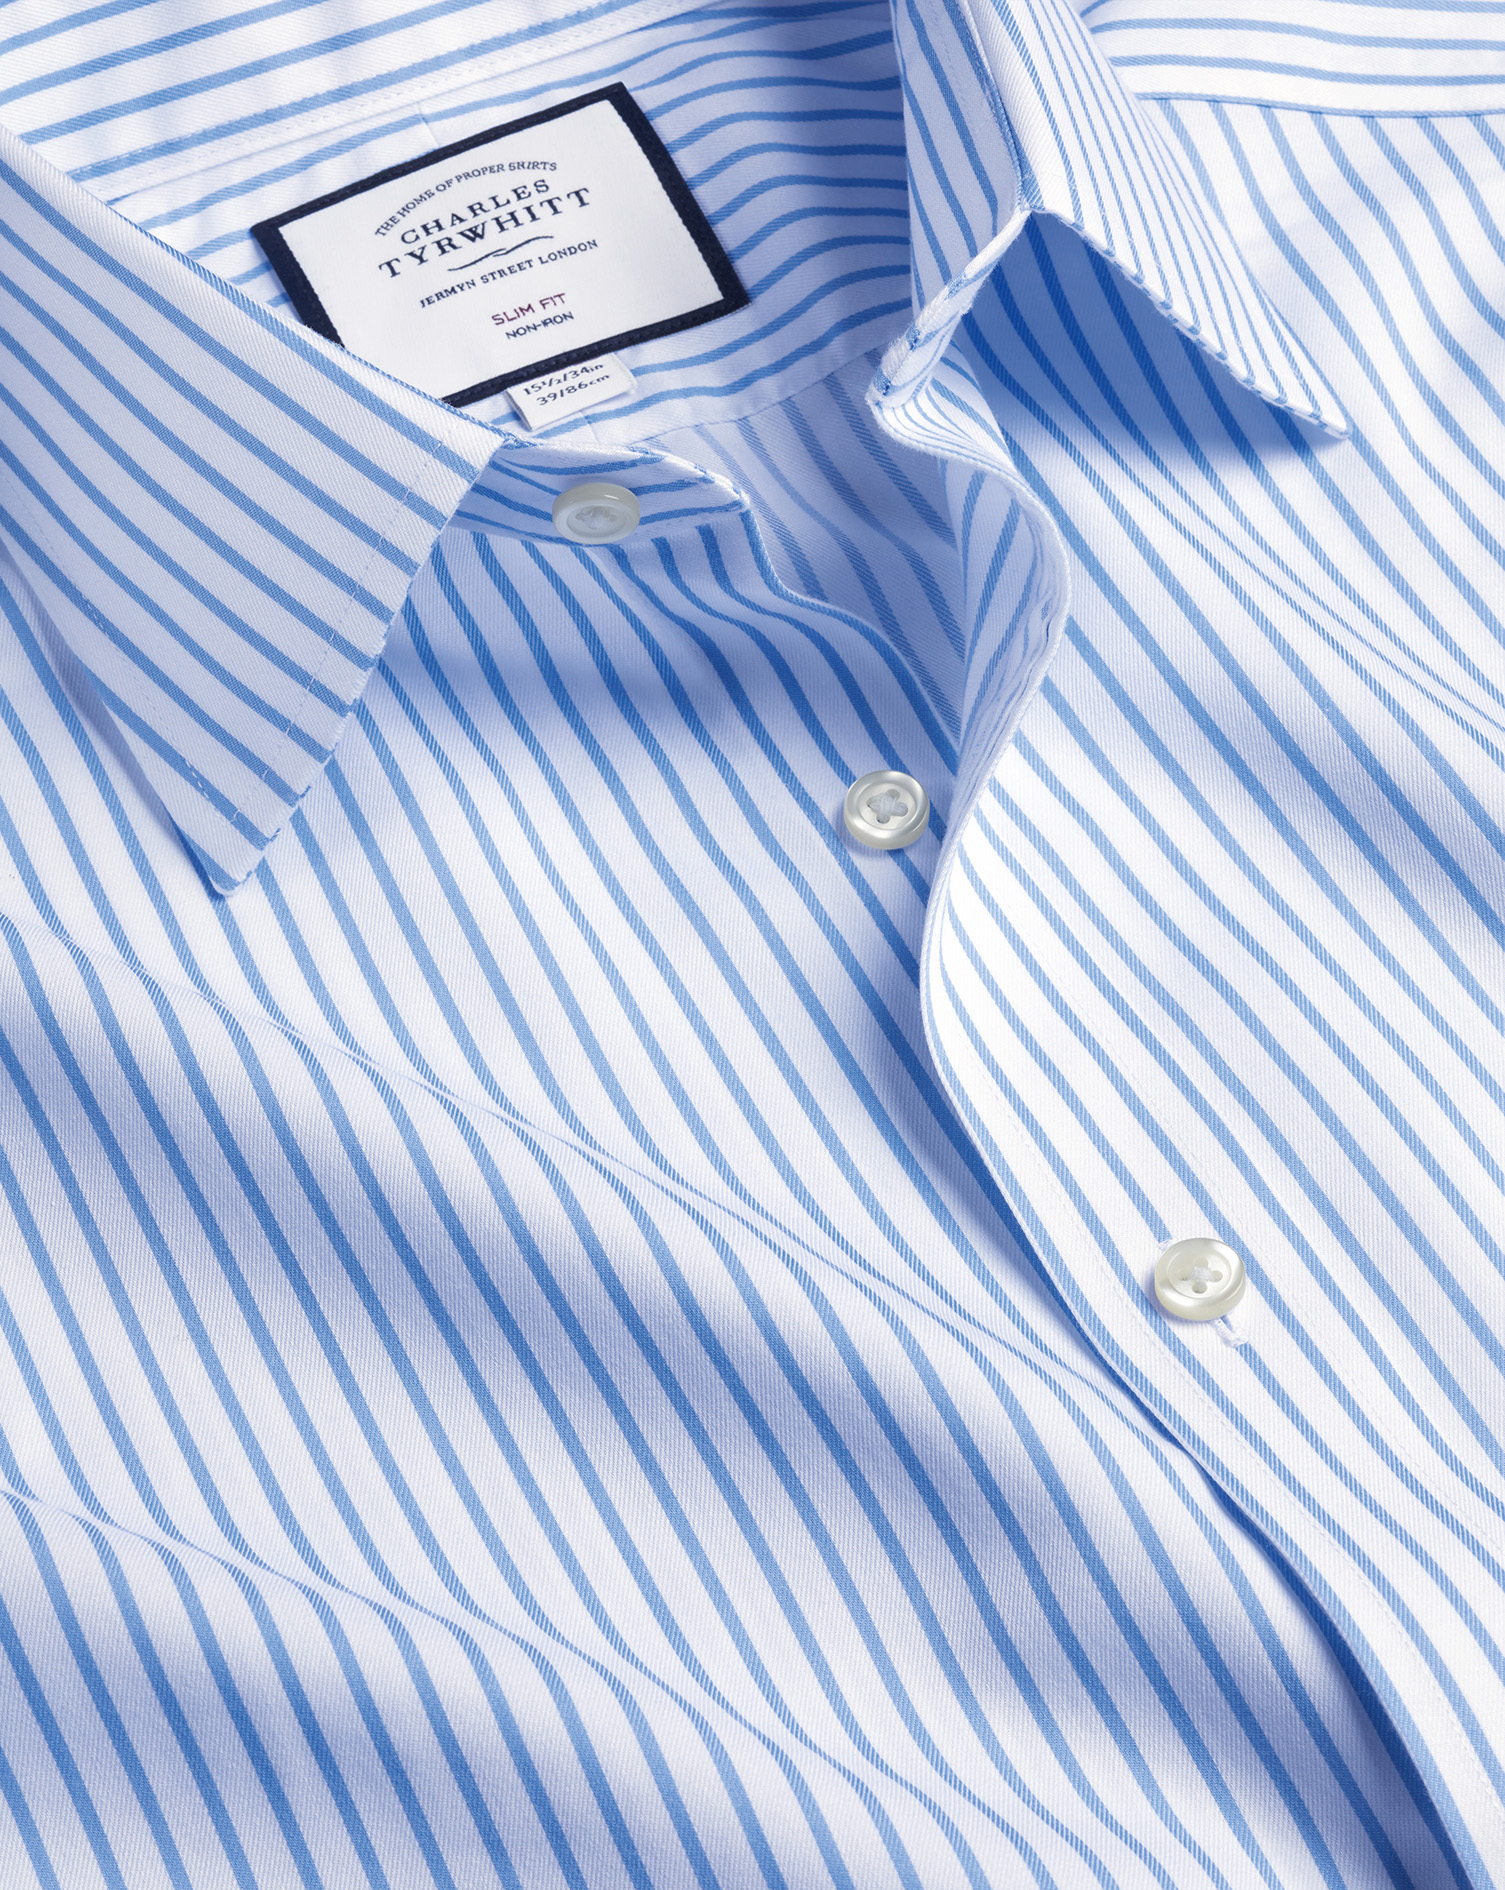 CH intarsia striped gassed cotton t-shirt navy/white - CH Carolina